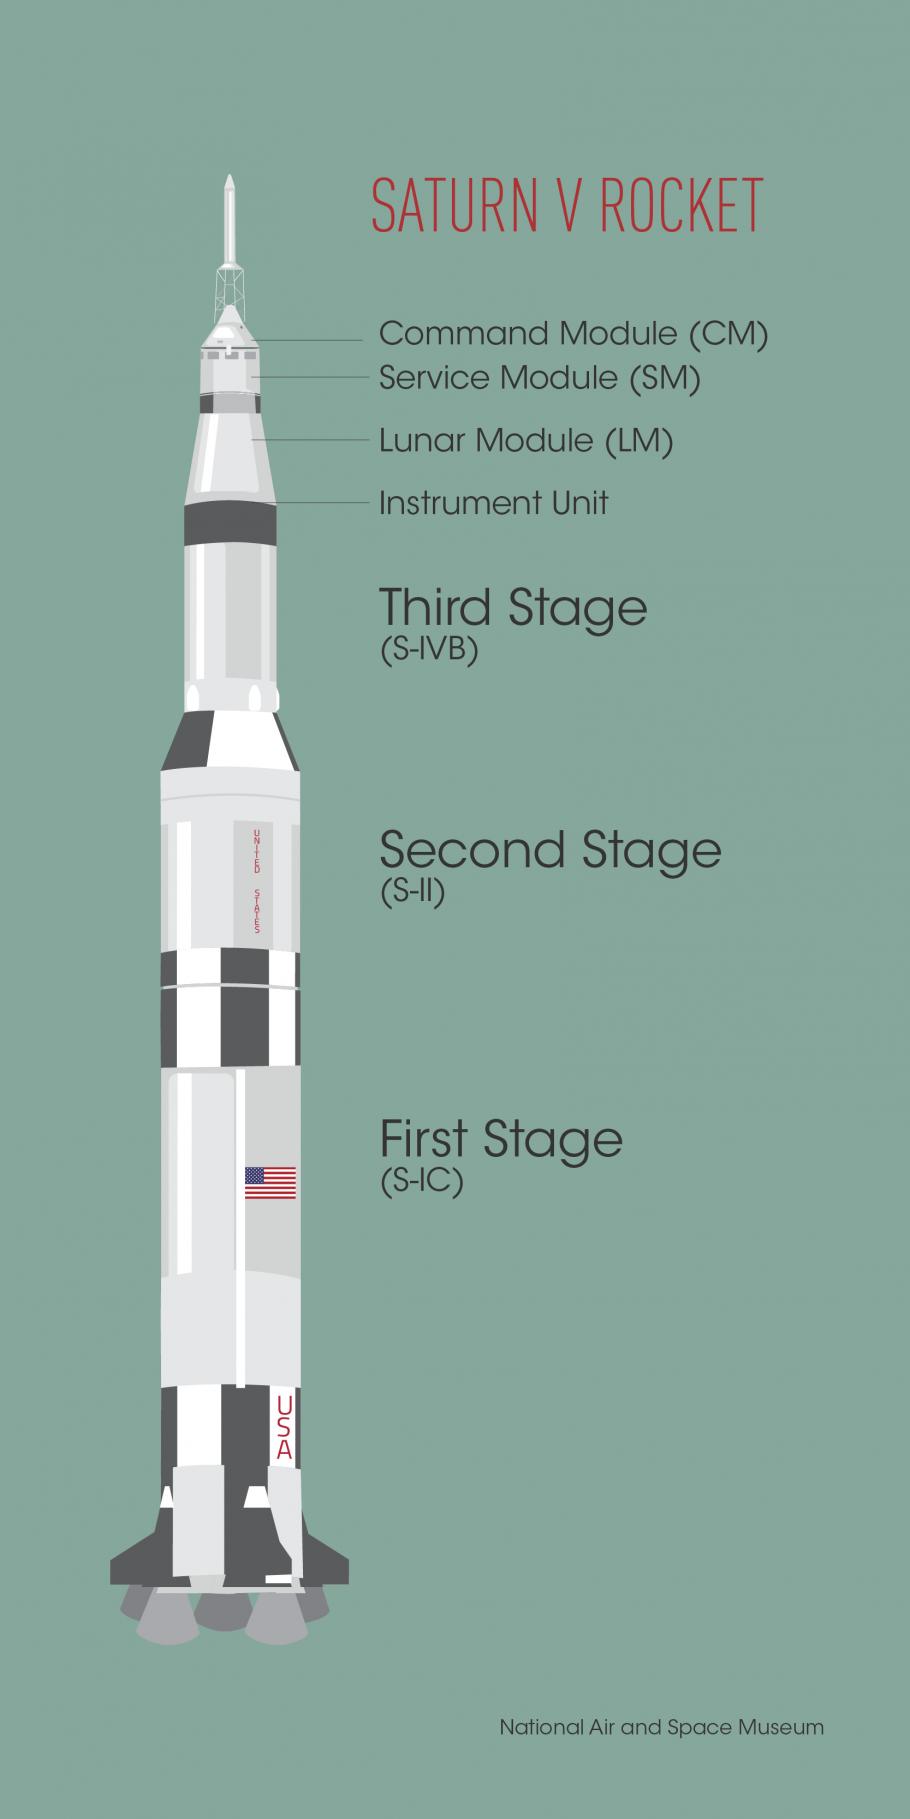 Looking Closer at the Saturn V